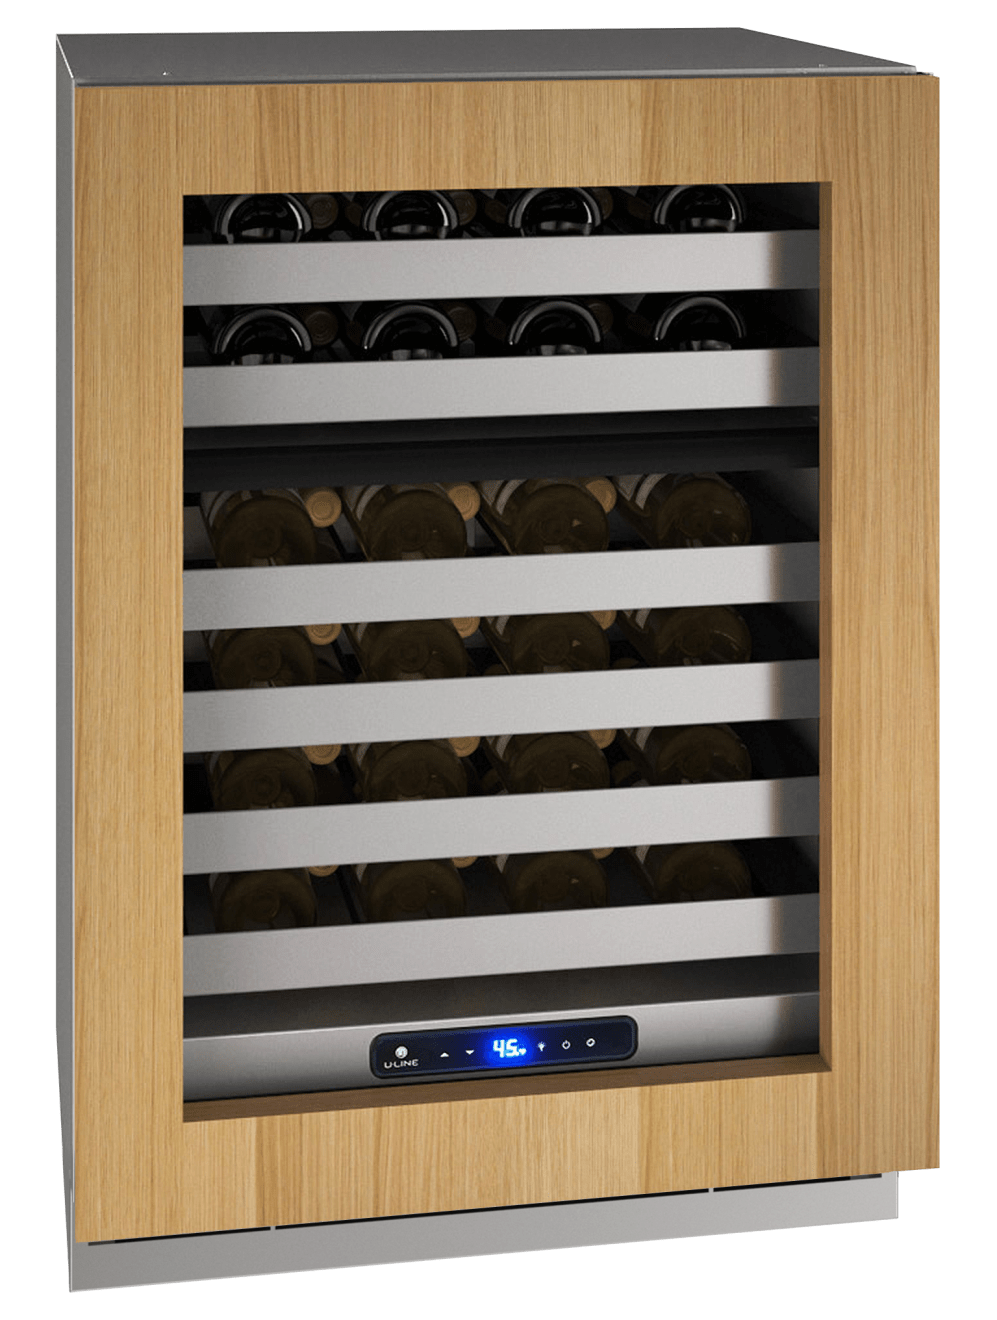 U-Line HWD524 24" Dual-Zone Wine Refrigerator Reversible Hinge Wine Coolers UHWD524-IG01A Luxury Appliances Direct